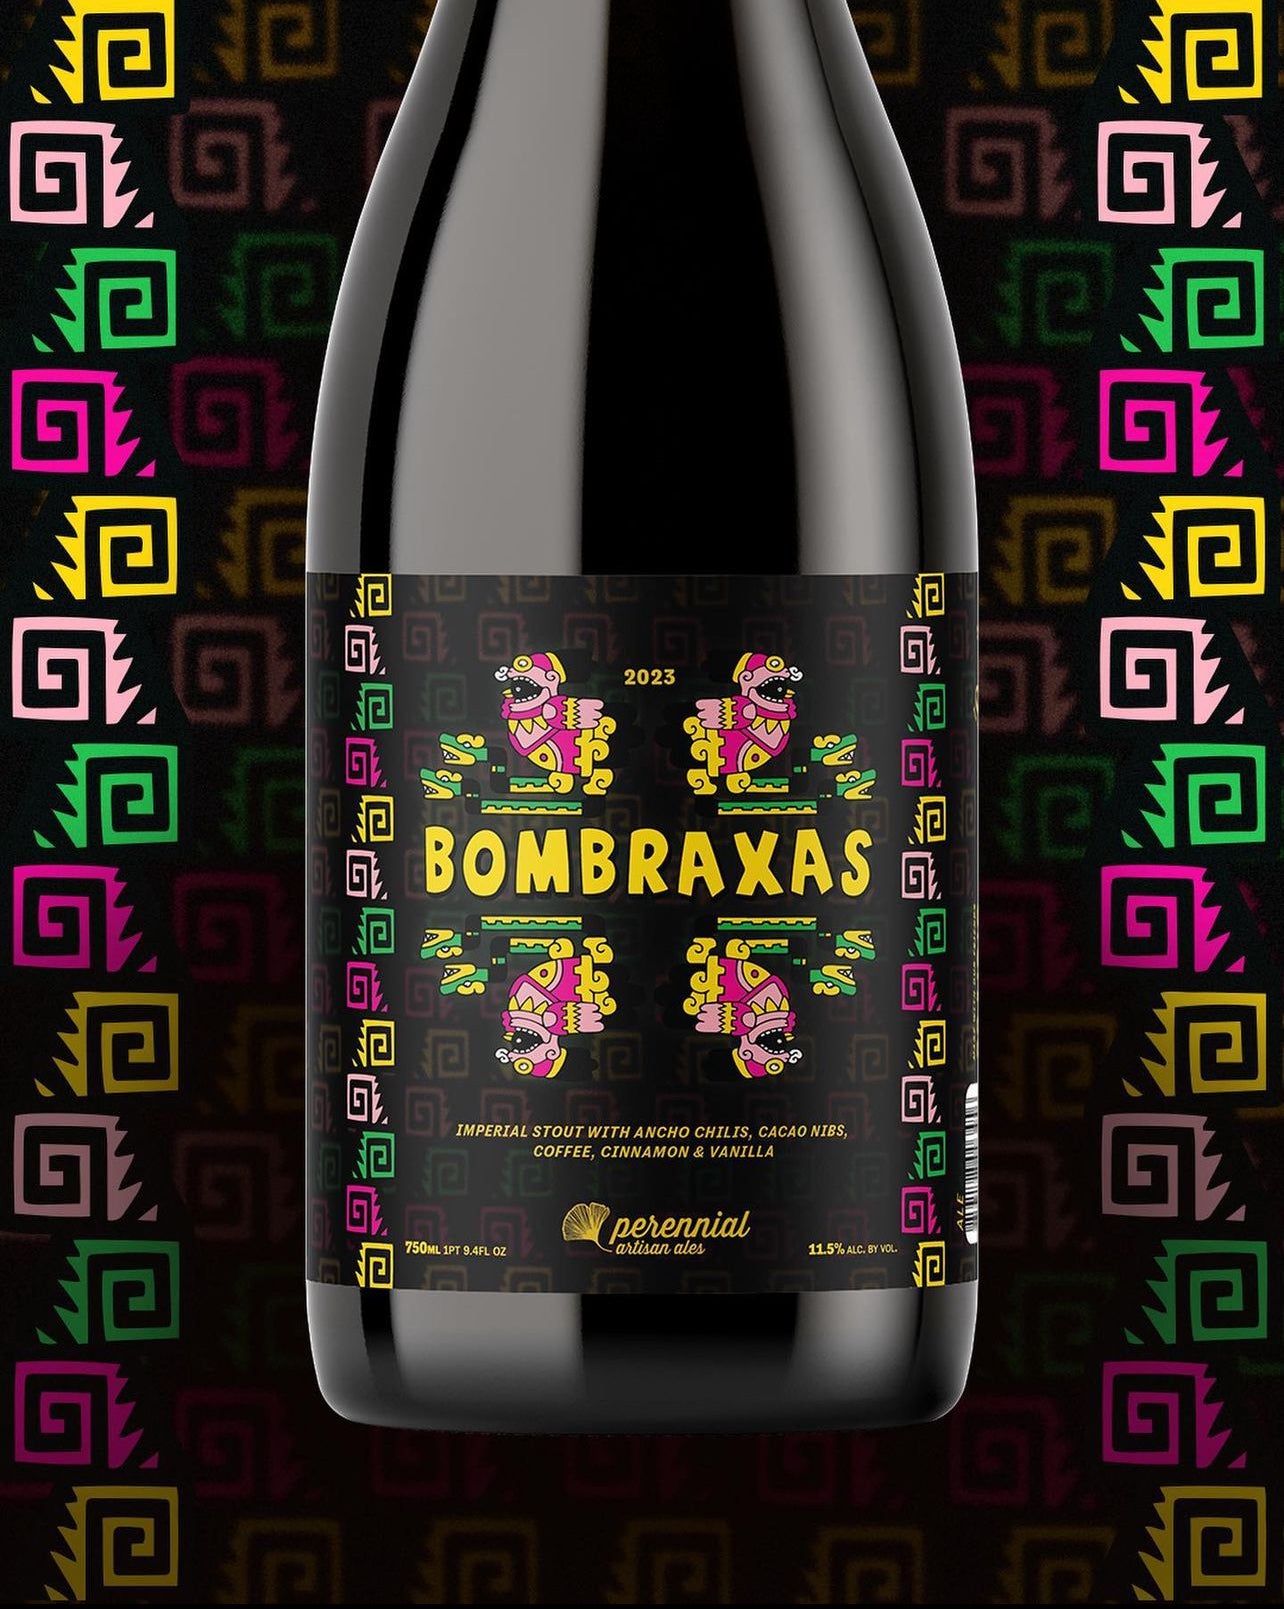 Perennial- Bombraxas (2023)